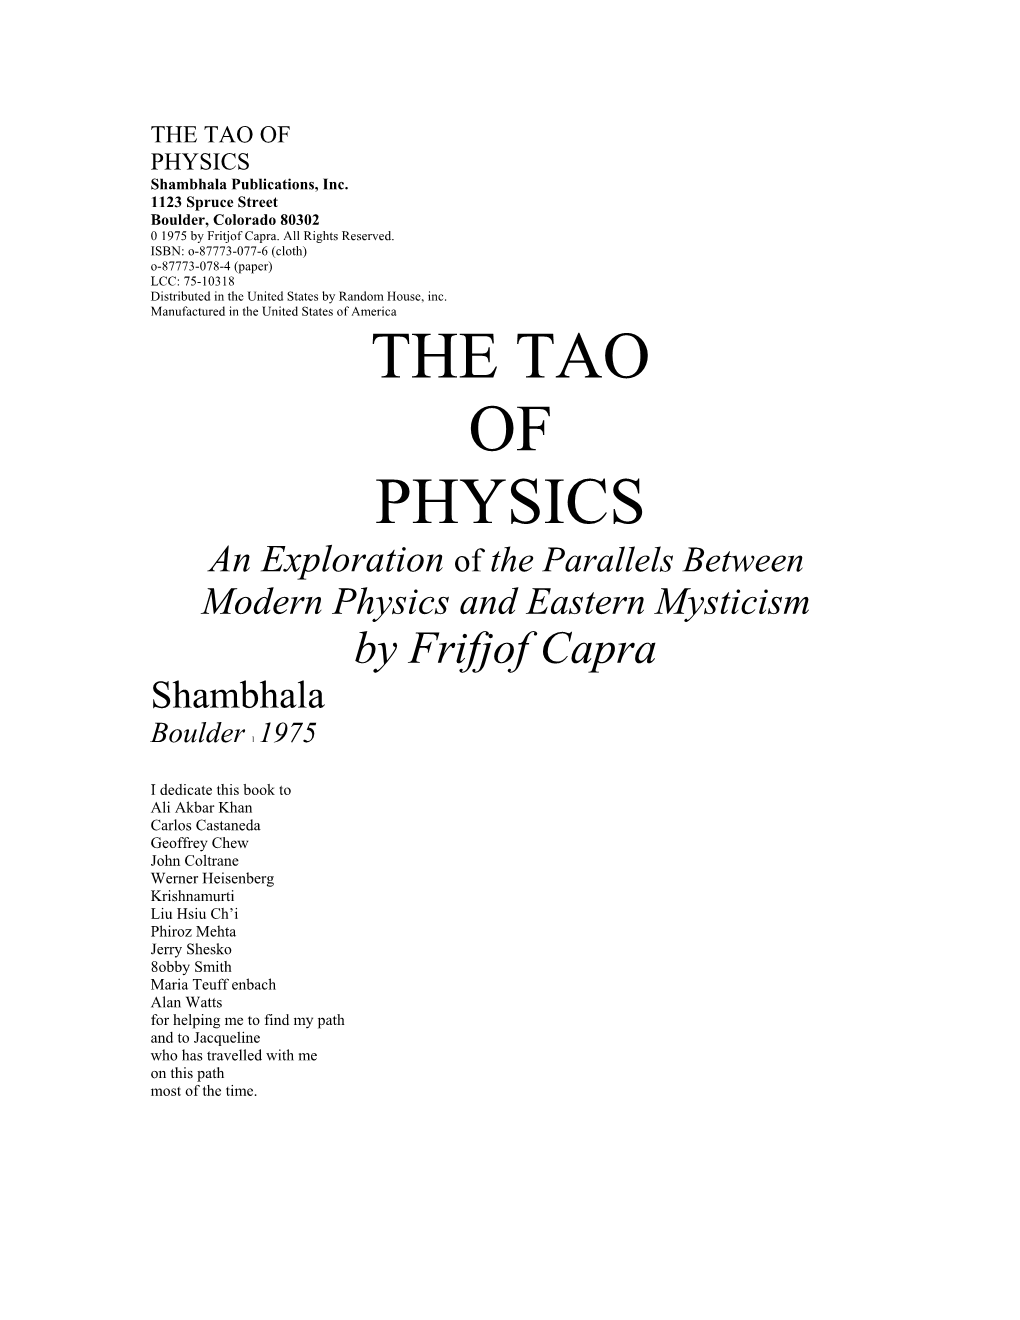 THE TAO of PHYSICS Shambhala Publications, Inc